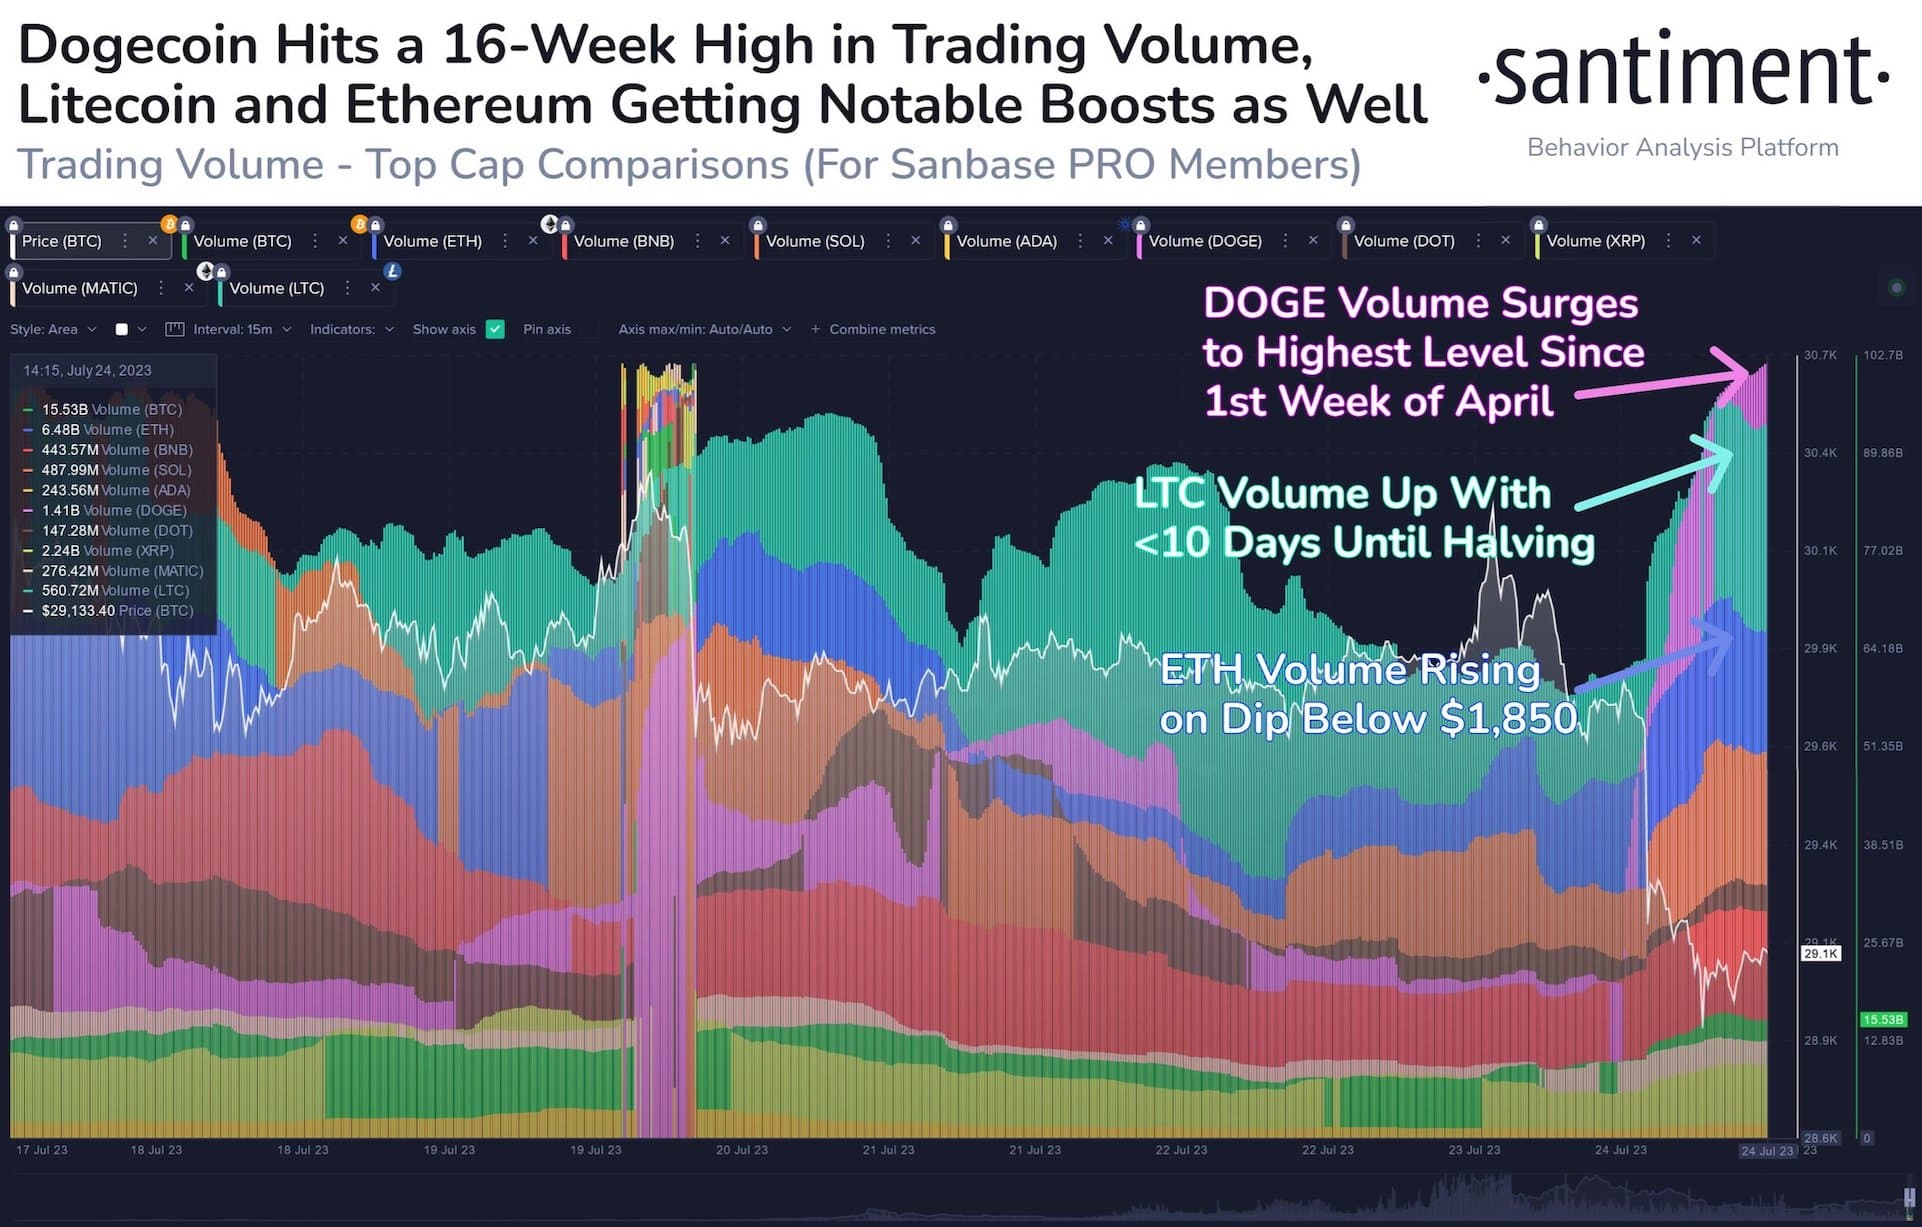 Assessing Market Presence: Global Trading Volumes of Dogecoin